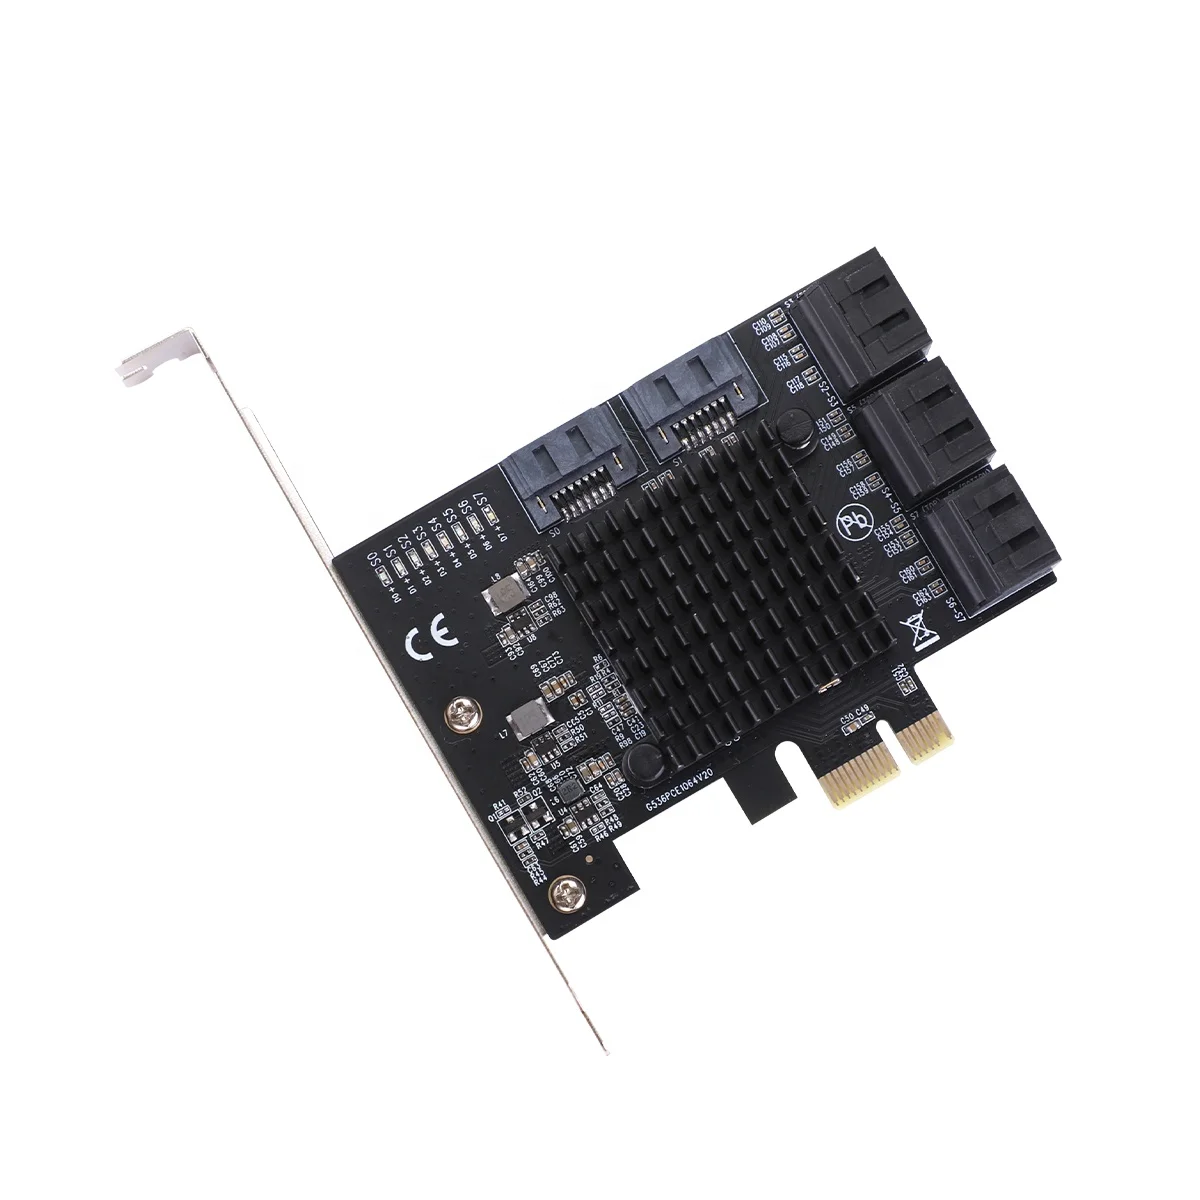 PCIe3.0x1 to 8 Ports SATA Card PCIe gen3 x1 to 8 Ports 6G SATA III 3.0 Controller Non Raid Expansion Card Low Profile Bracket